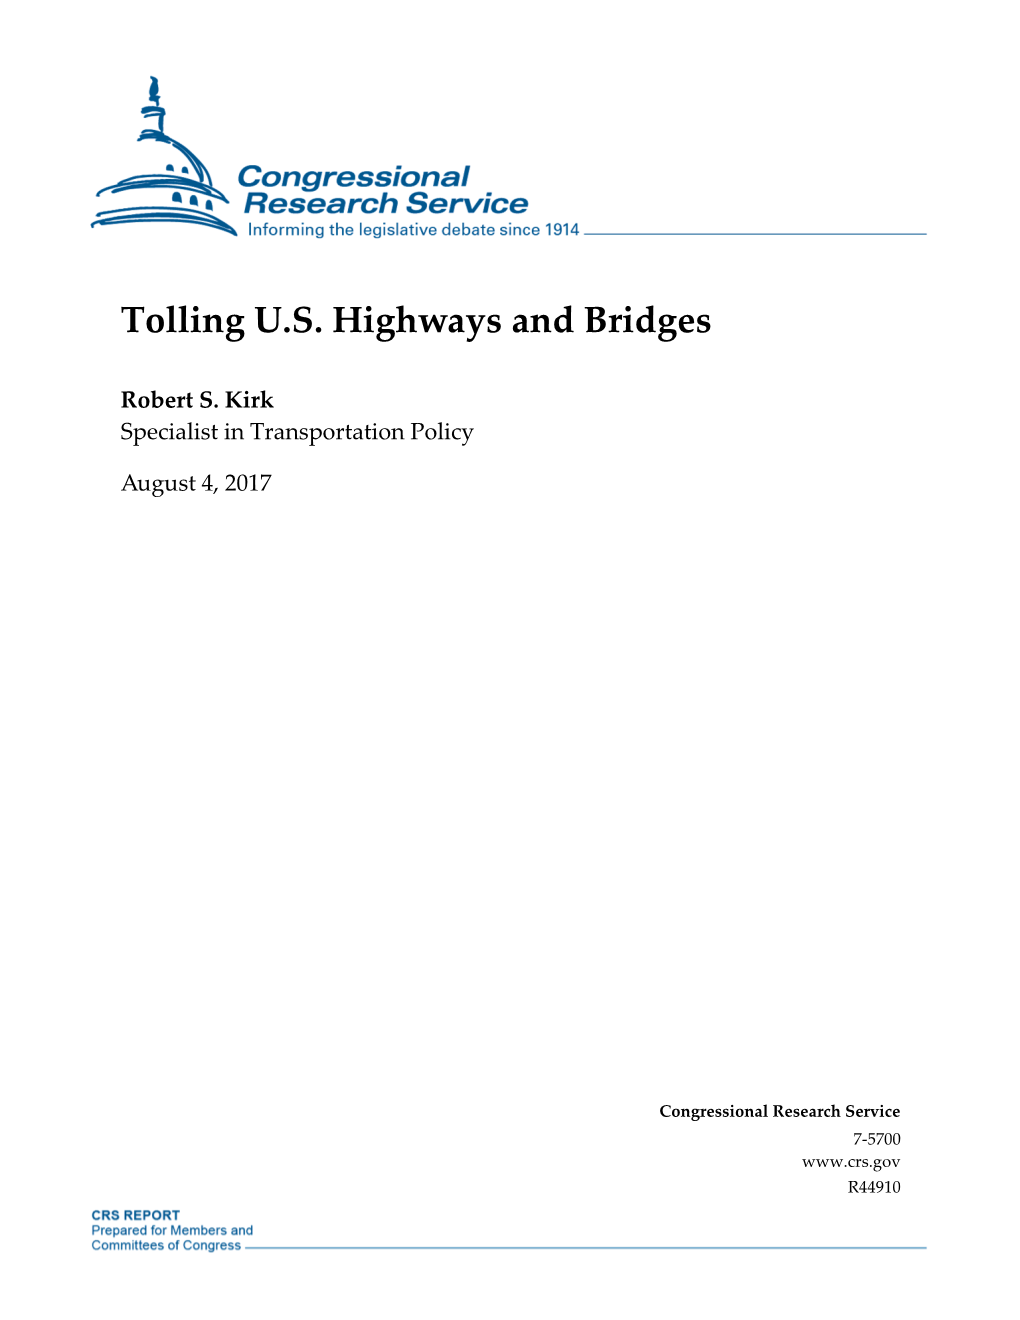 Tolling U.S. Highways and Bridges, 2017